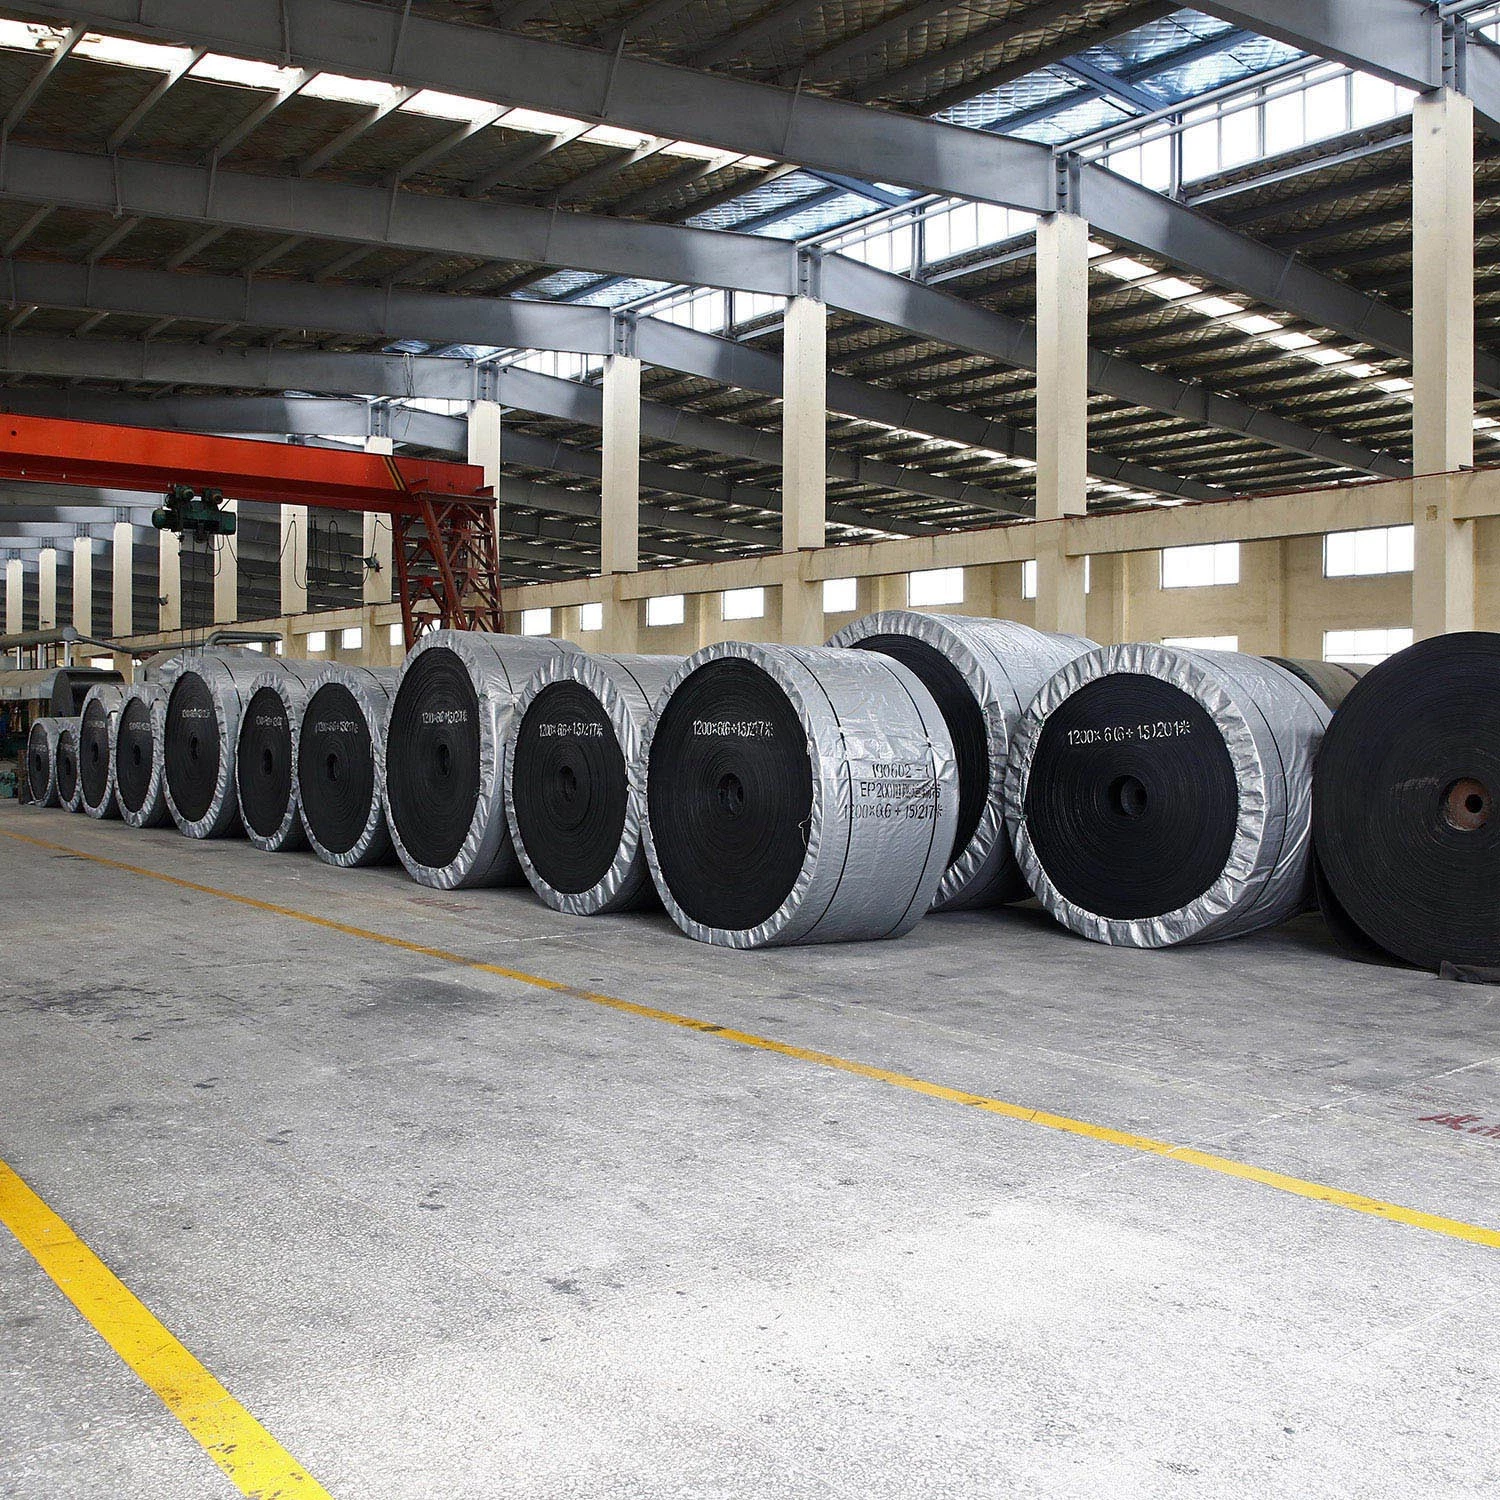 High Strength/Abrasion/Temperature/Fire/Tear/Wear/Conveyor Belting Heavy Duty Steel Cord Conveyor Belt for Metallurgy/Mining Coal Port Chemical Industry